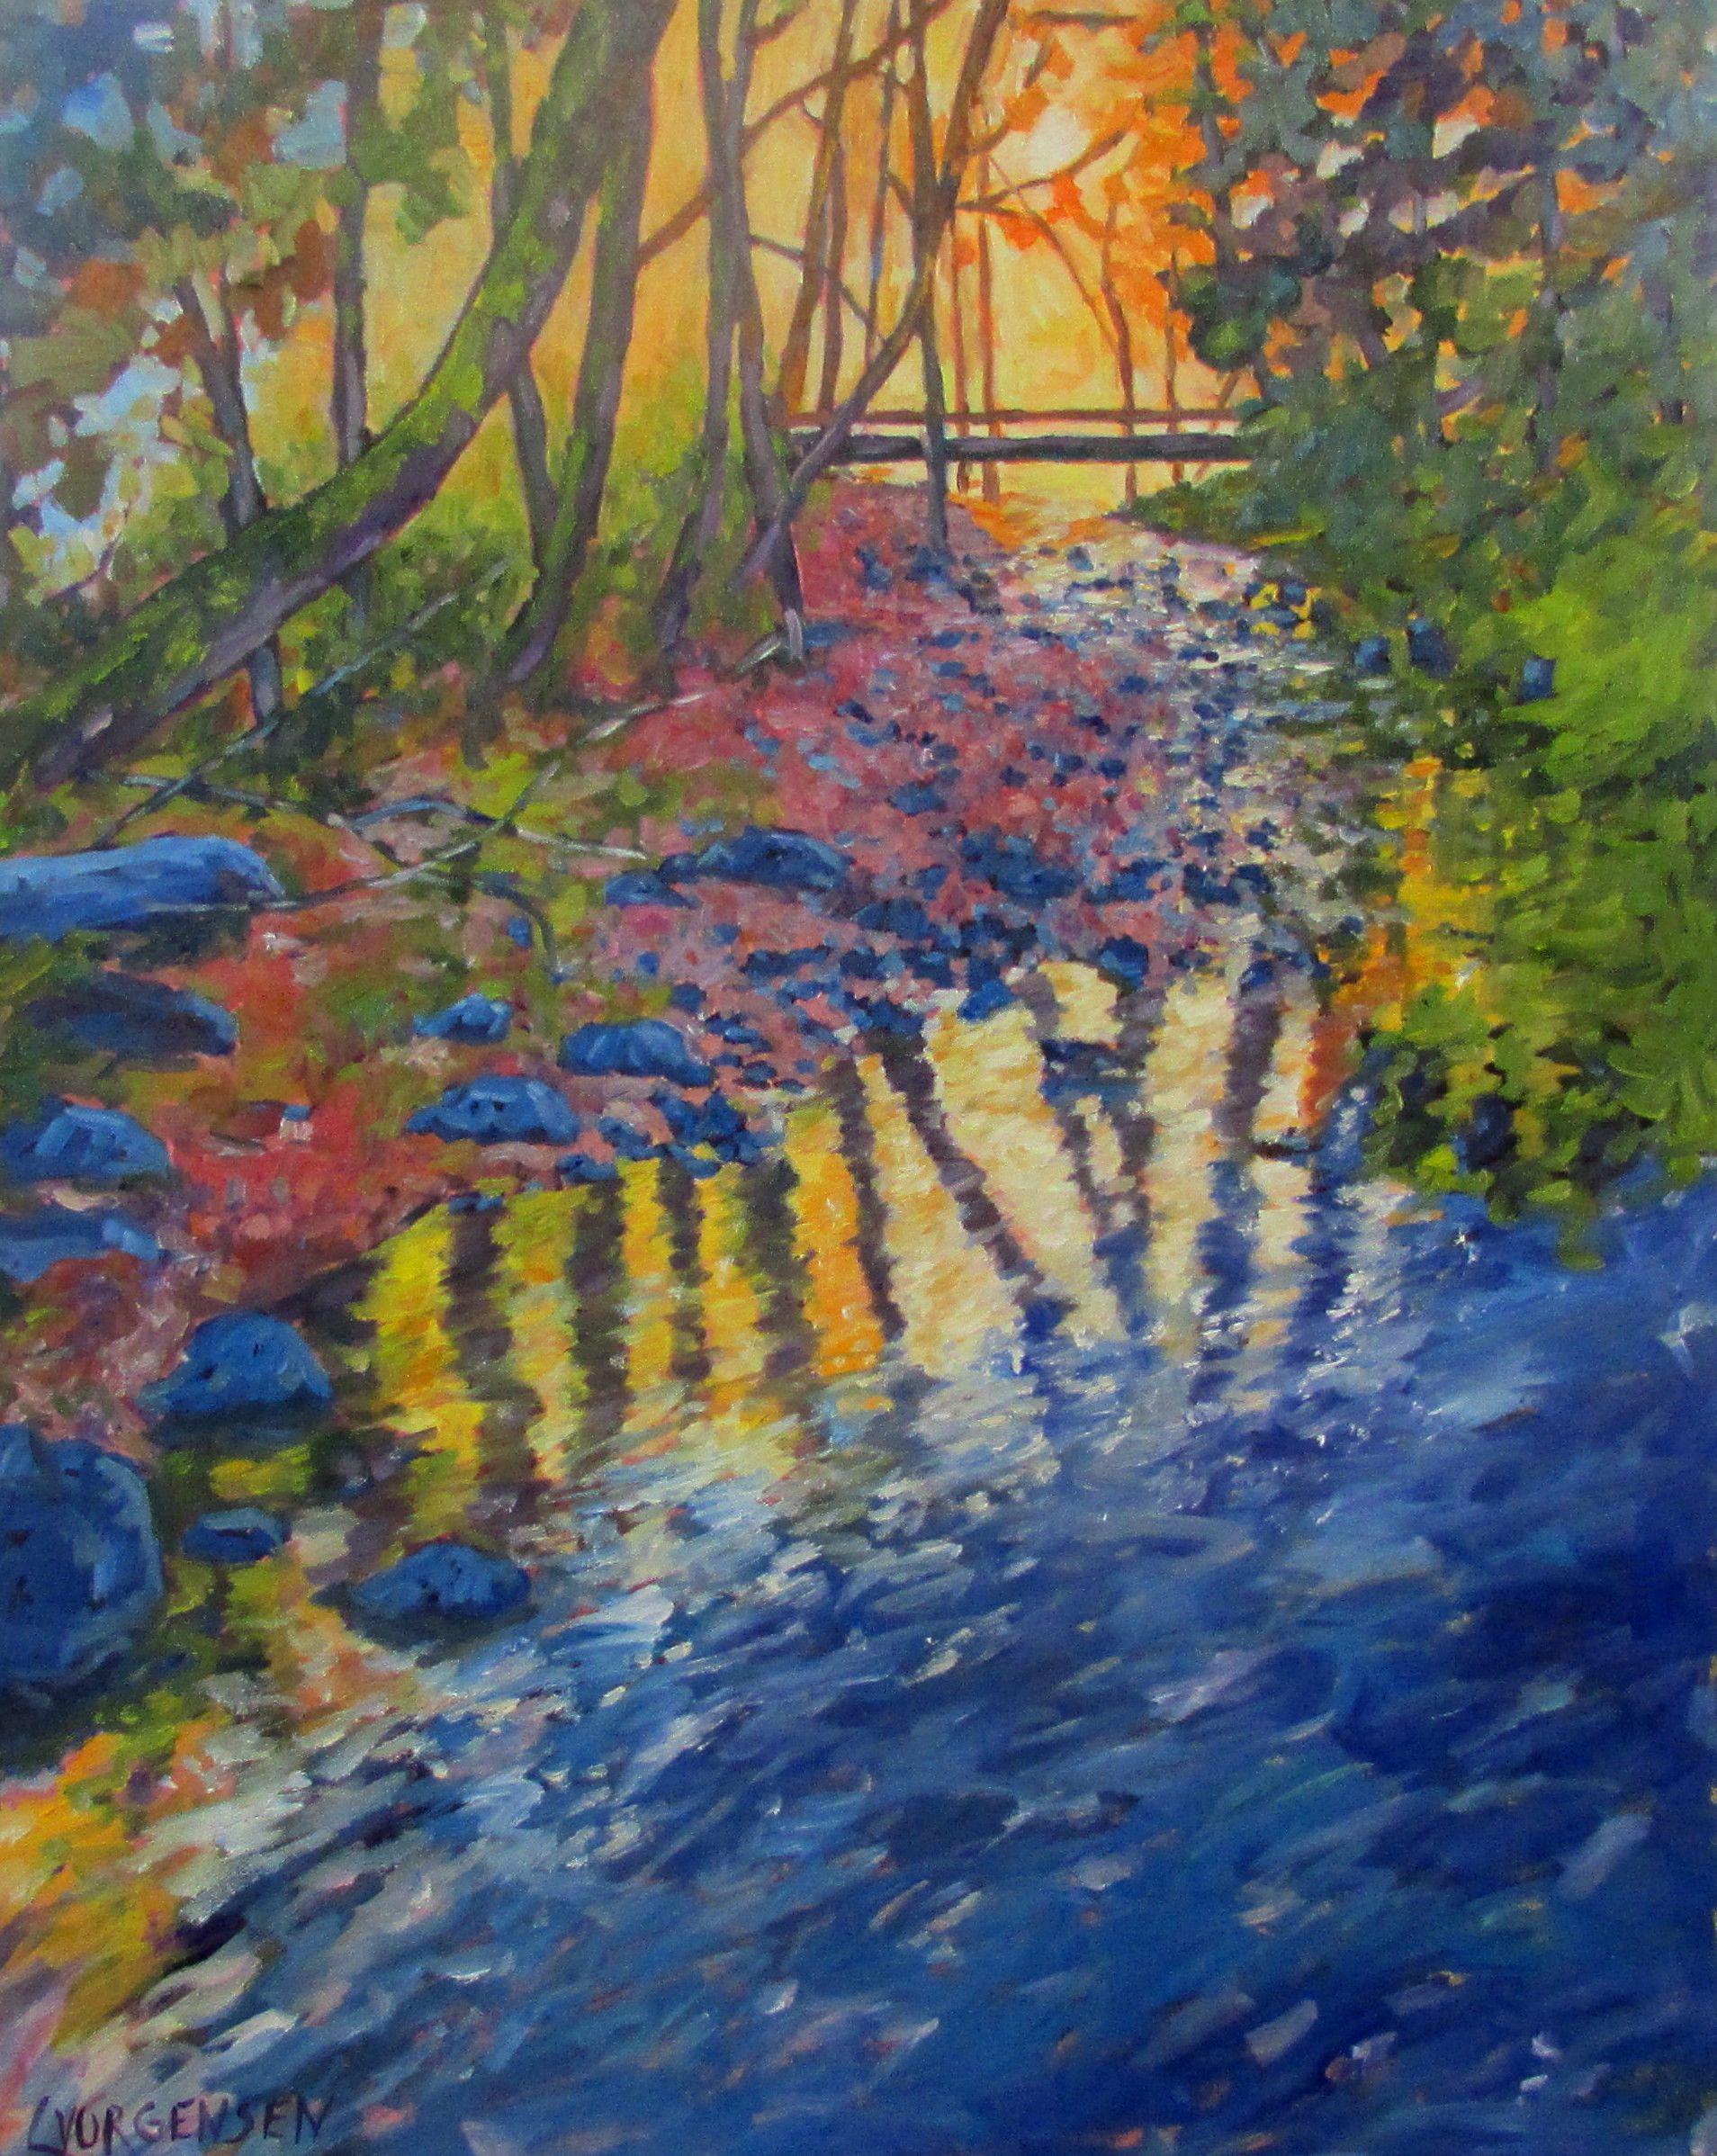 Linda Yurgensen Landscape Painting - Riverside # 2, Painting, Oil on Canvas